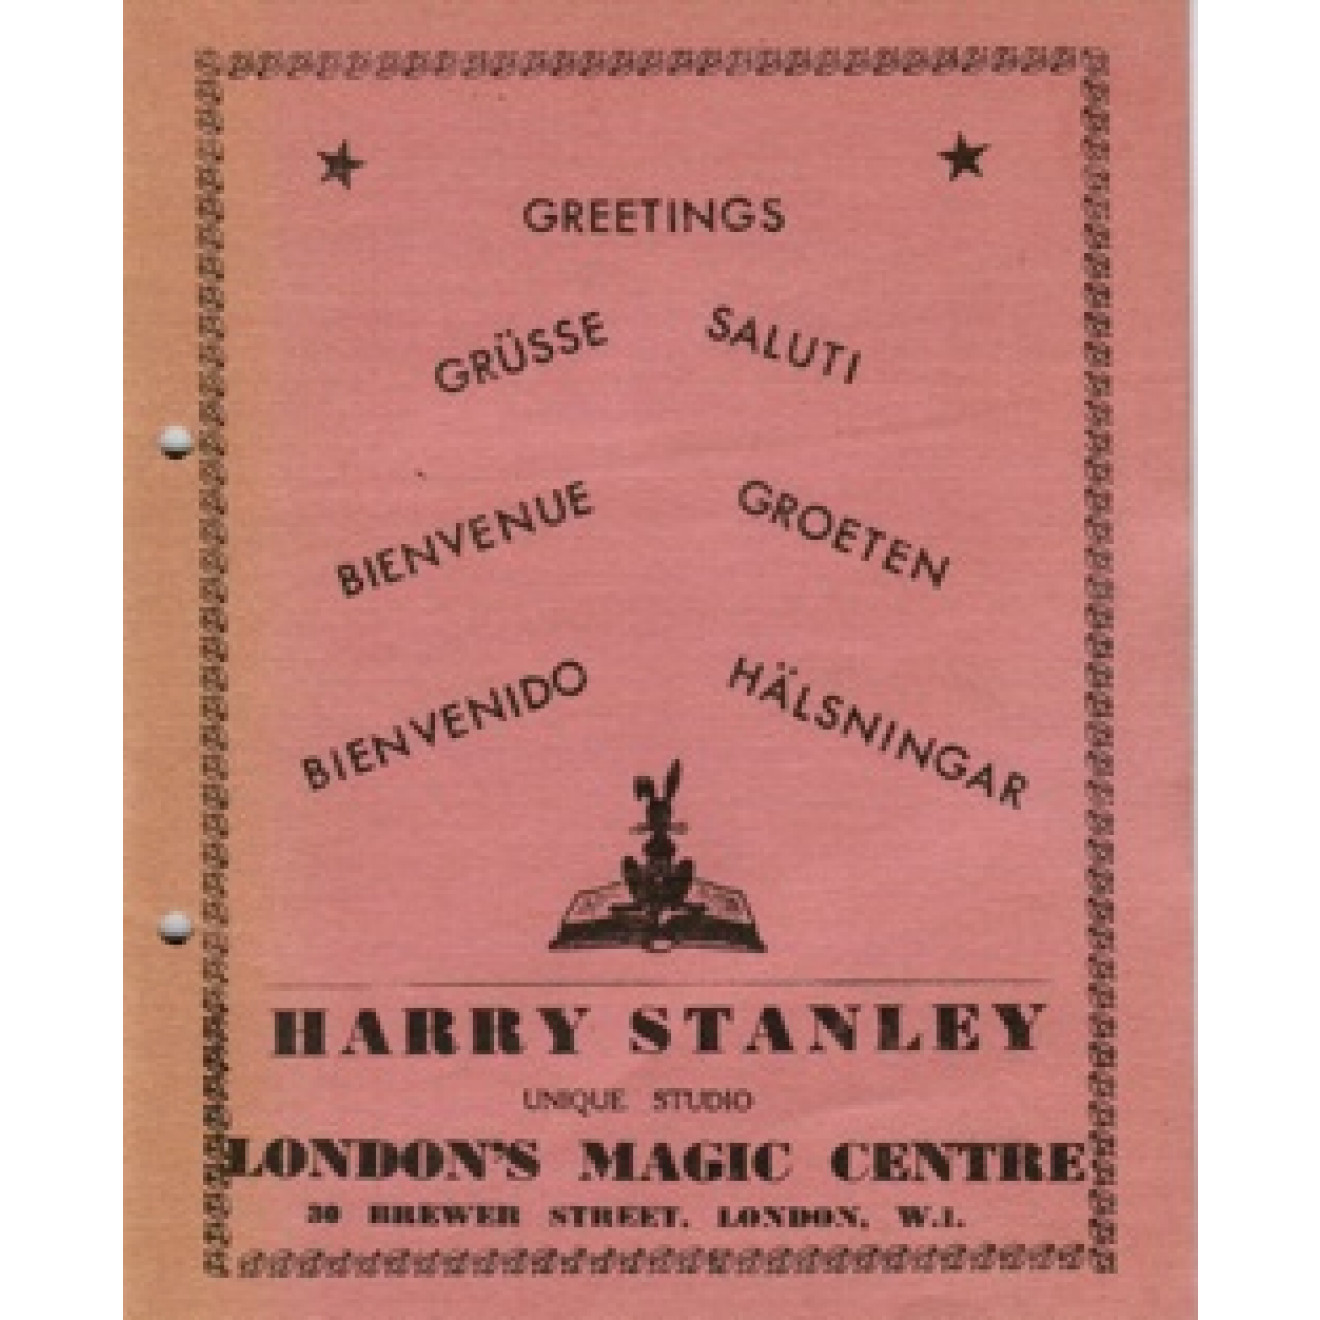 London's Magic Centre